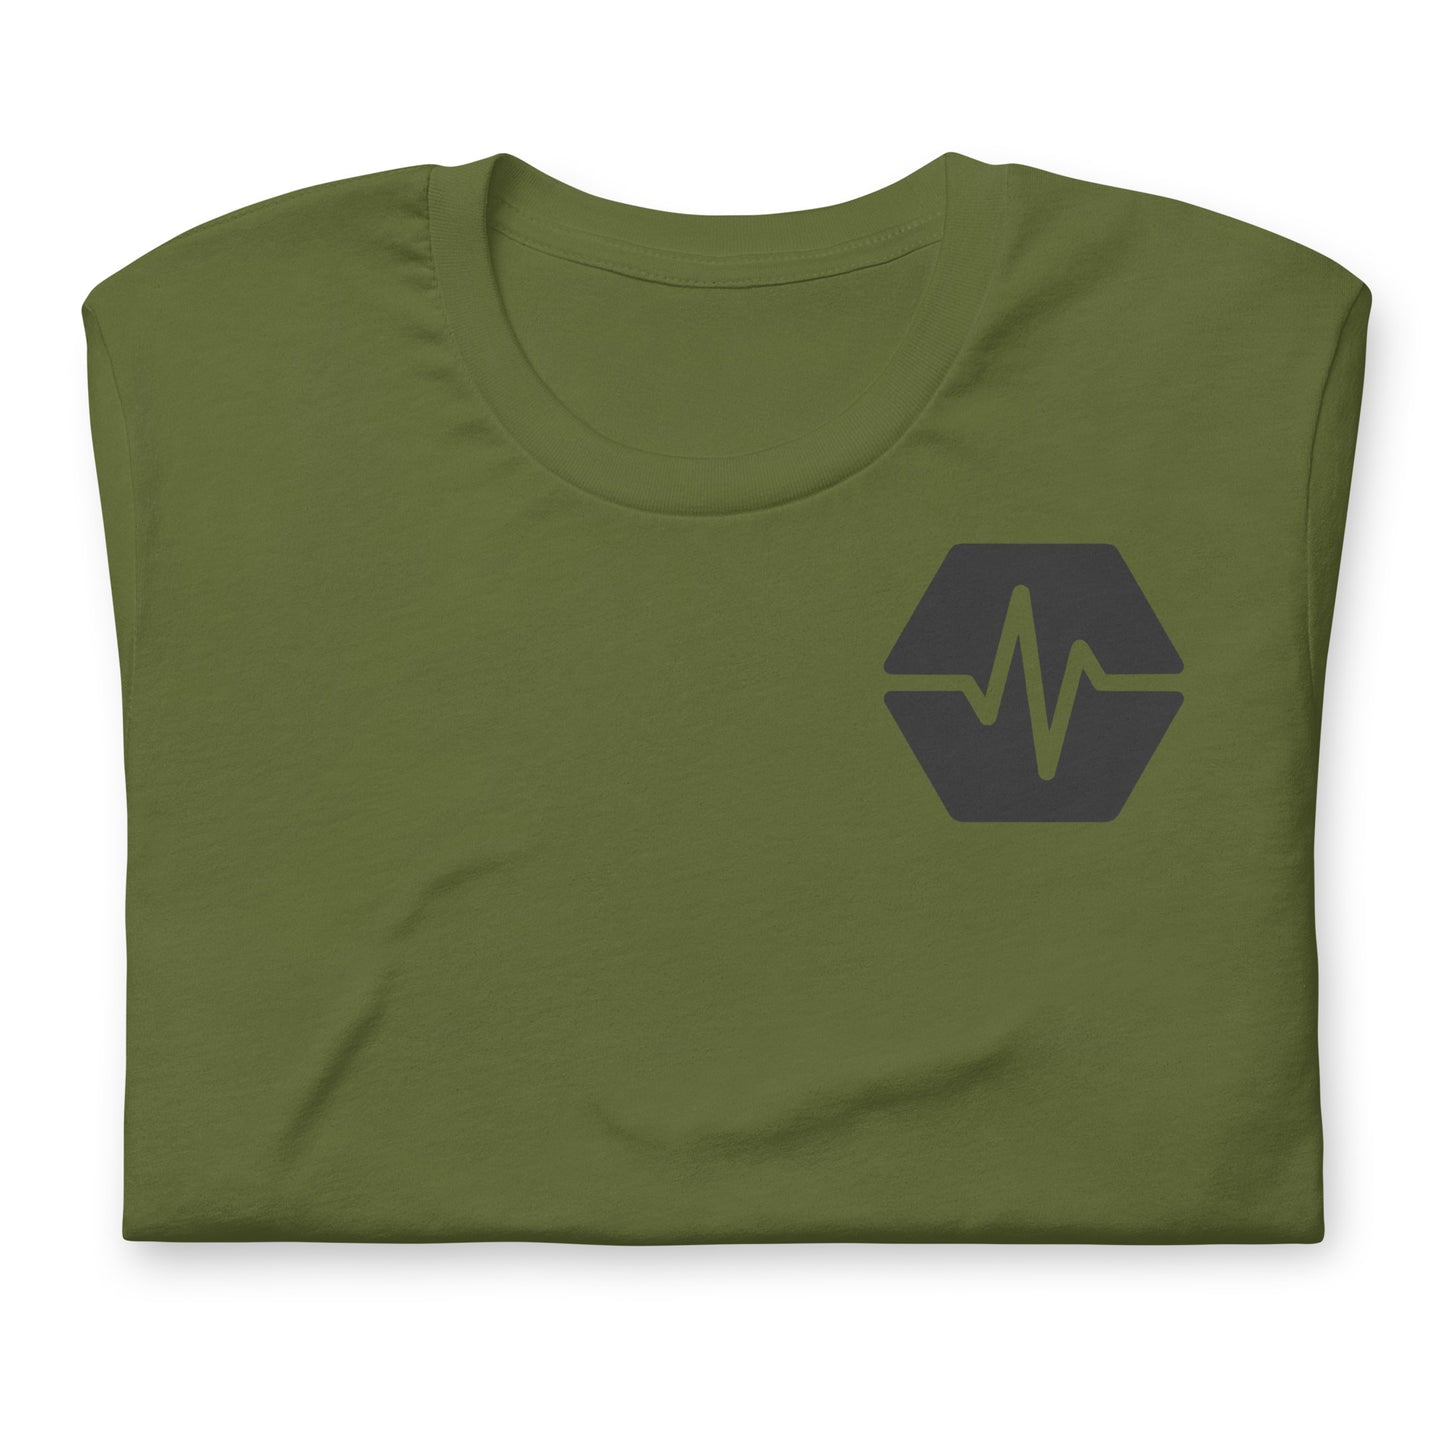 PulseChain Unisex T-Shirt